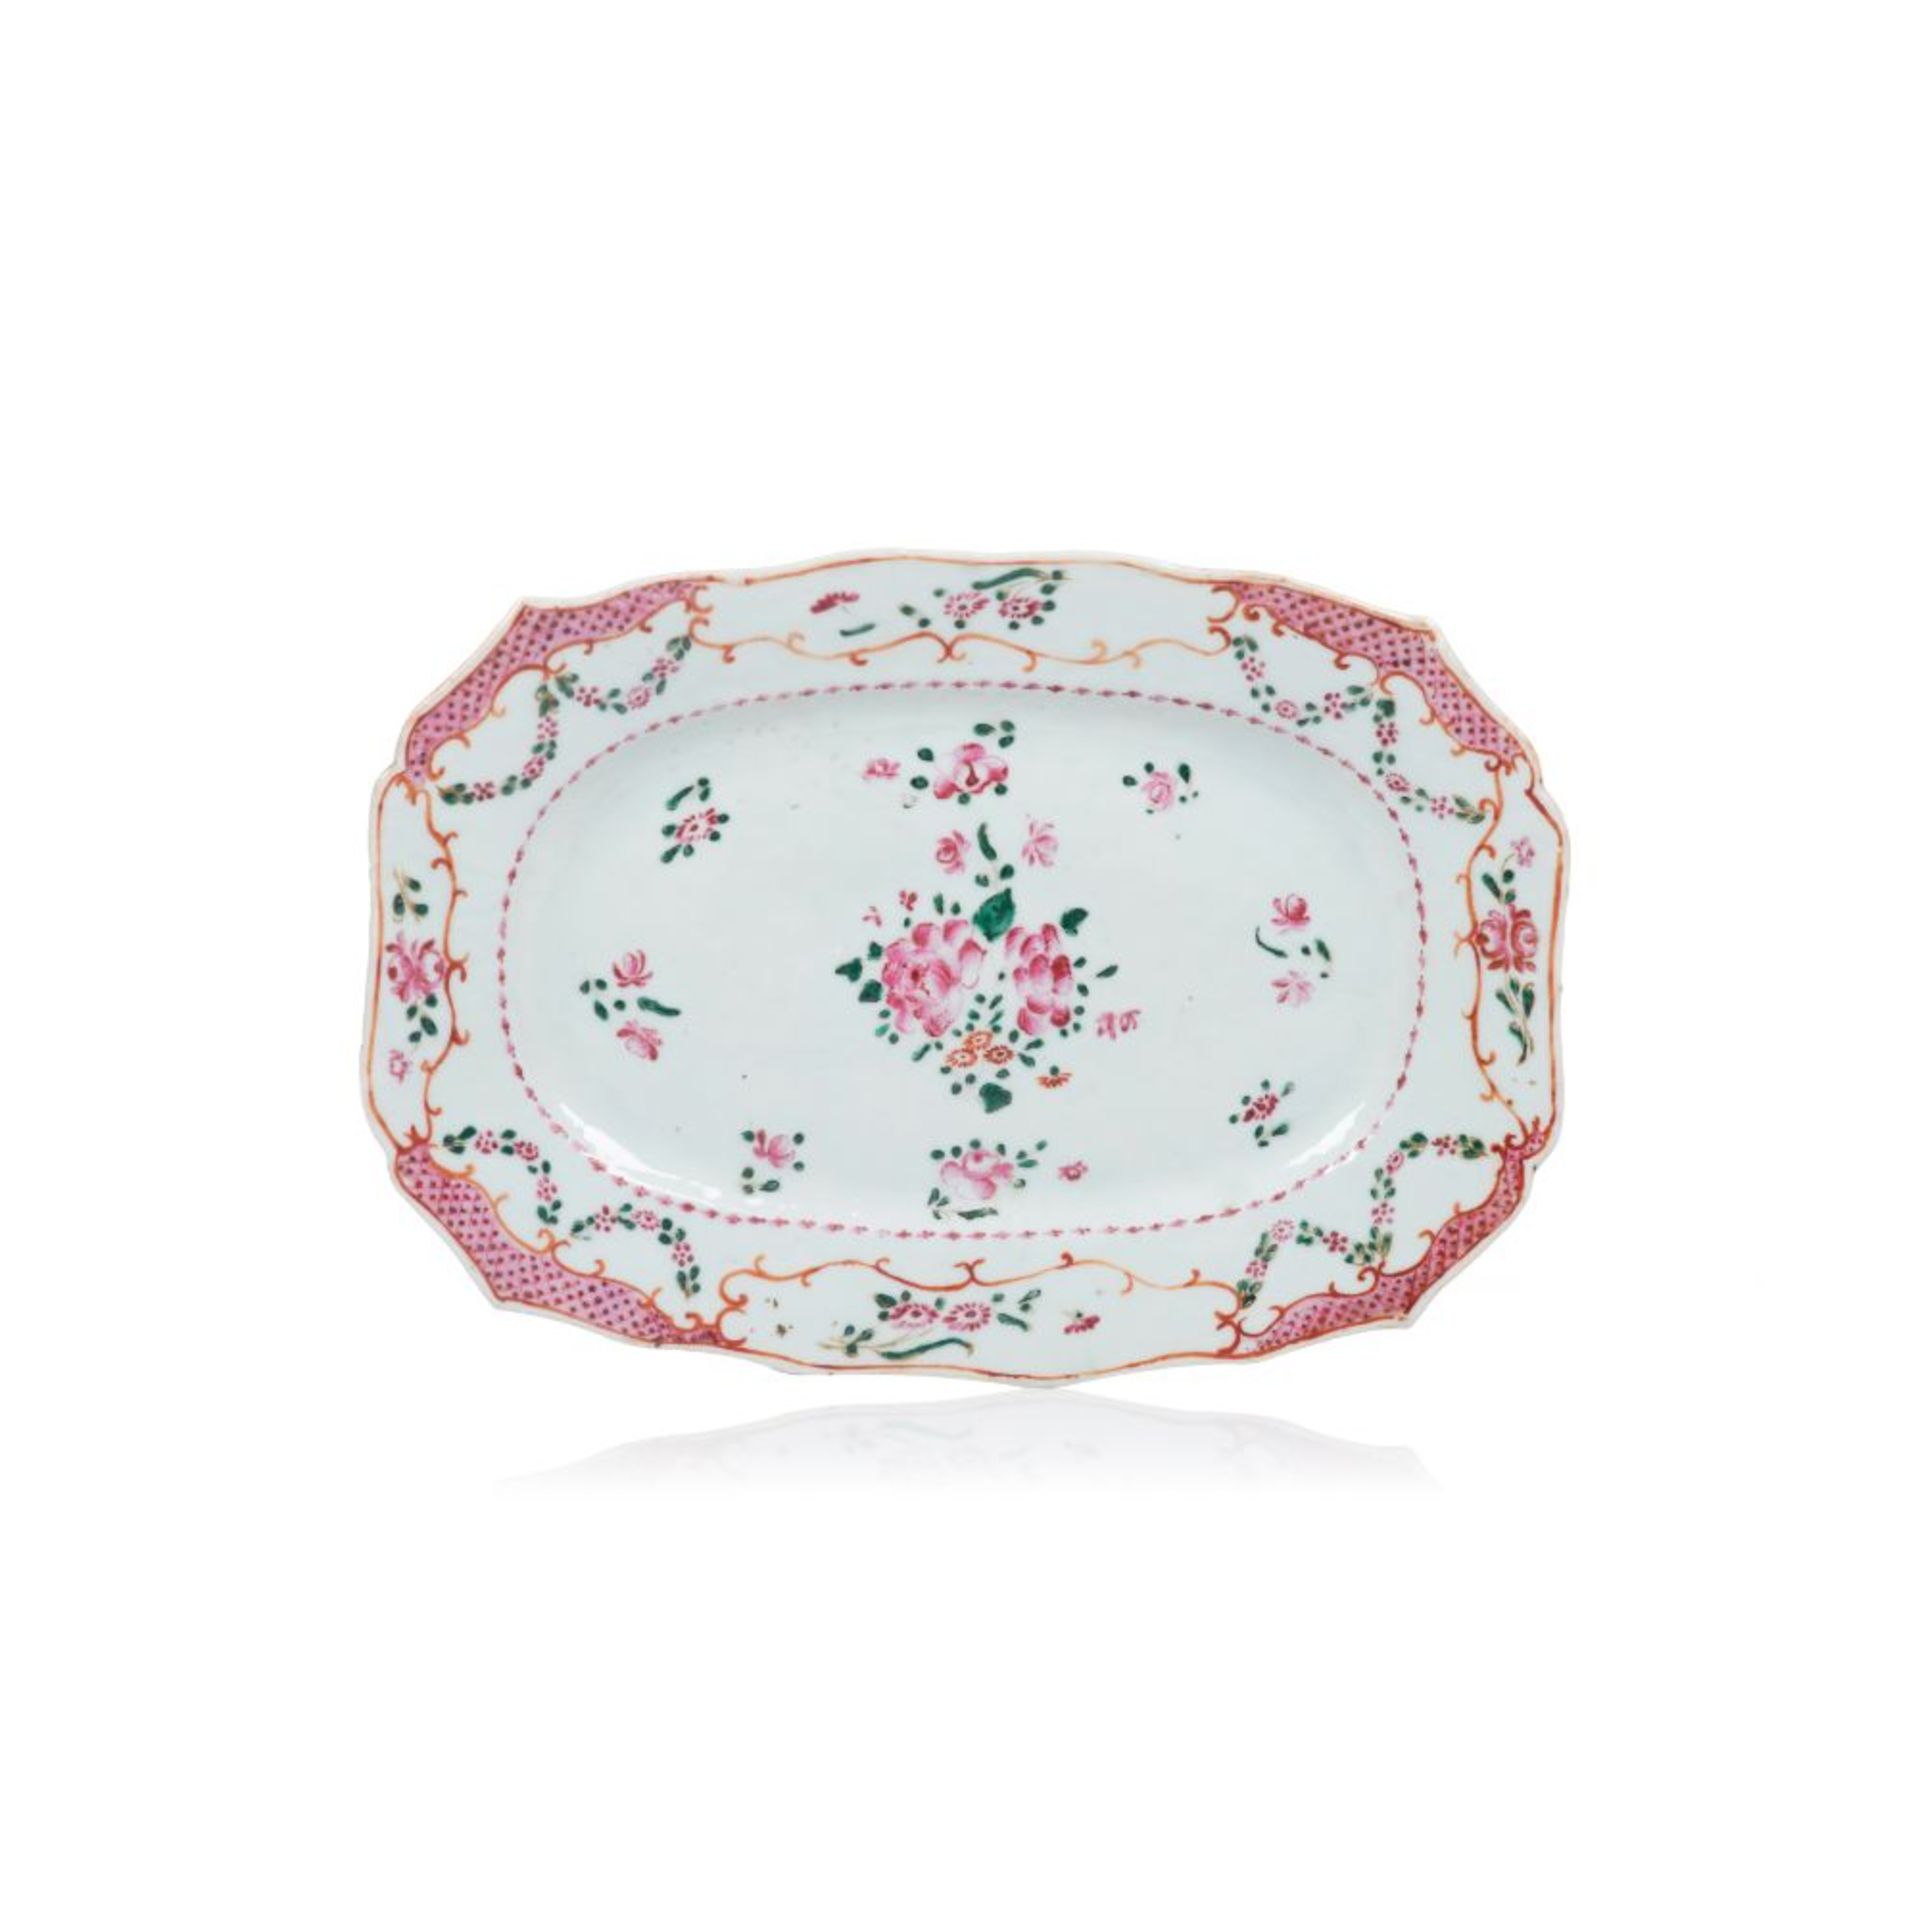 An octagonal serving platter, Chinese export porcelain, Polychrome floral "Famille Rose" enamelled